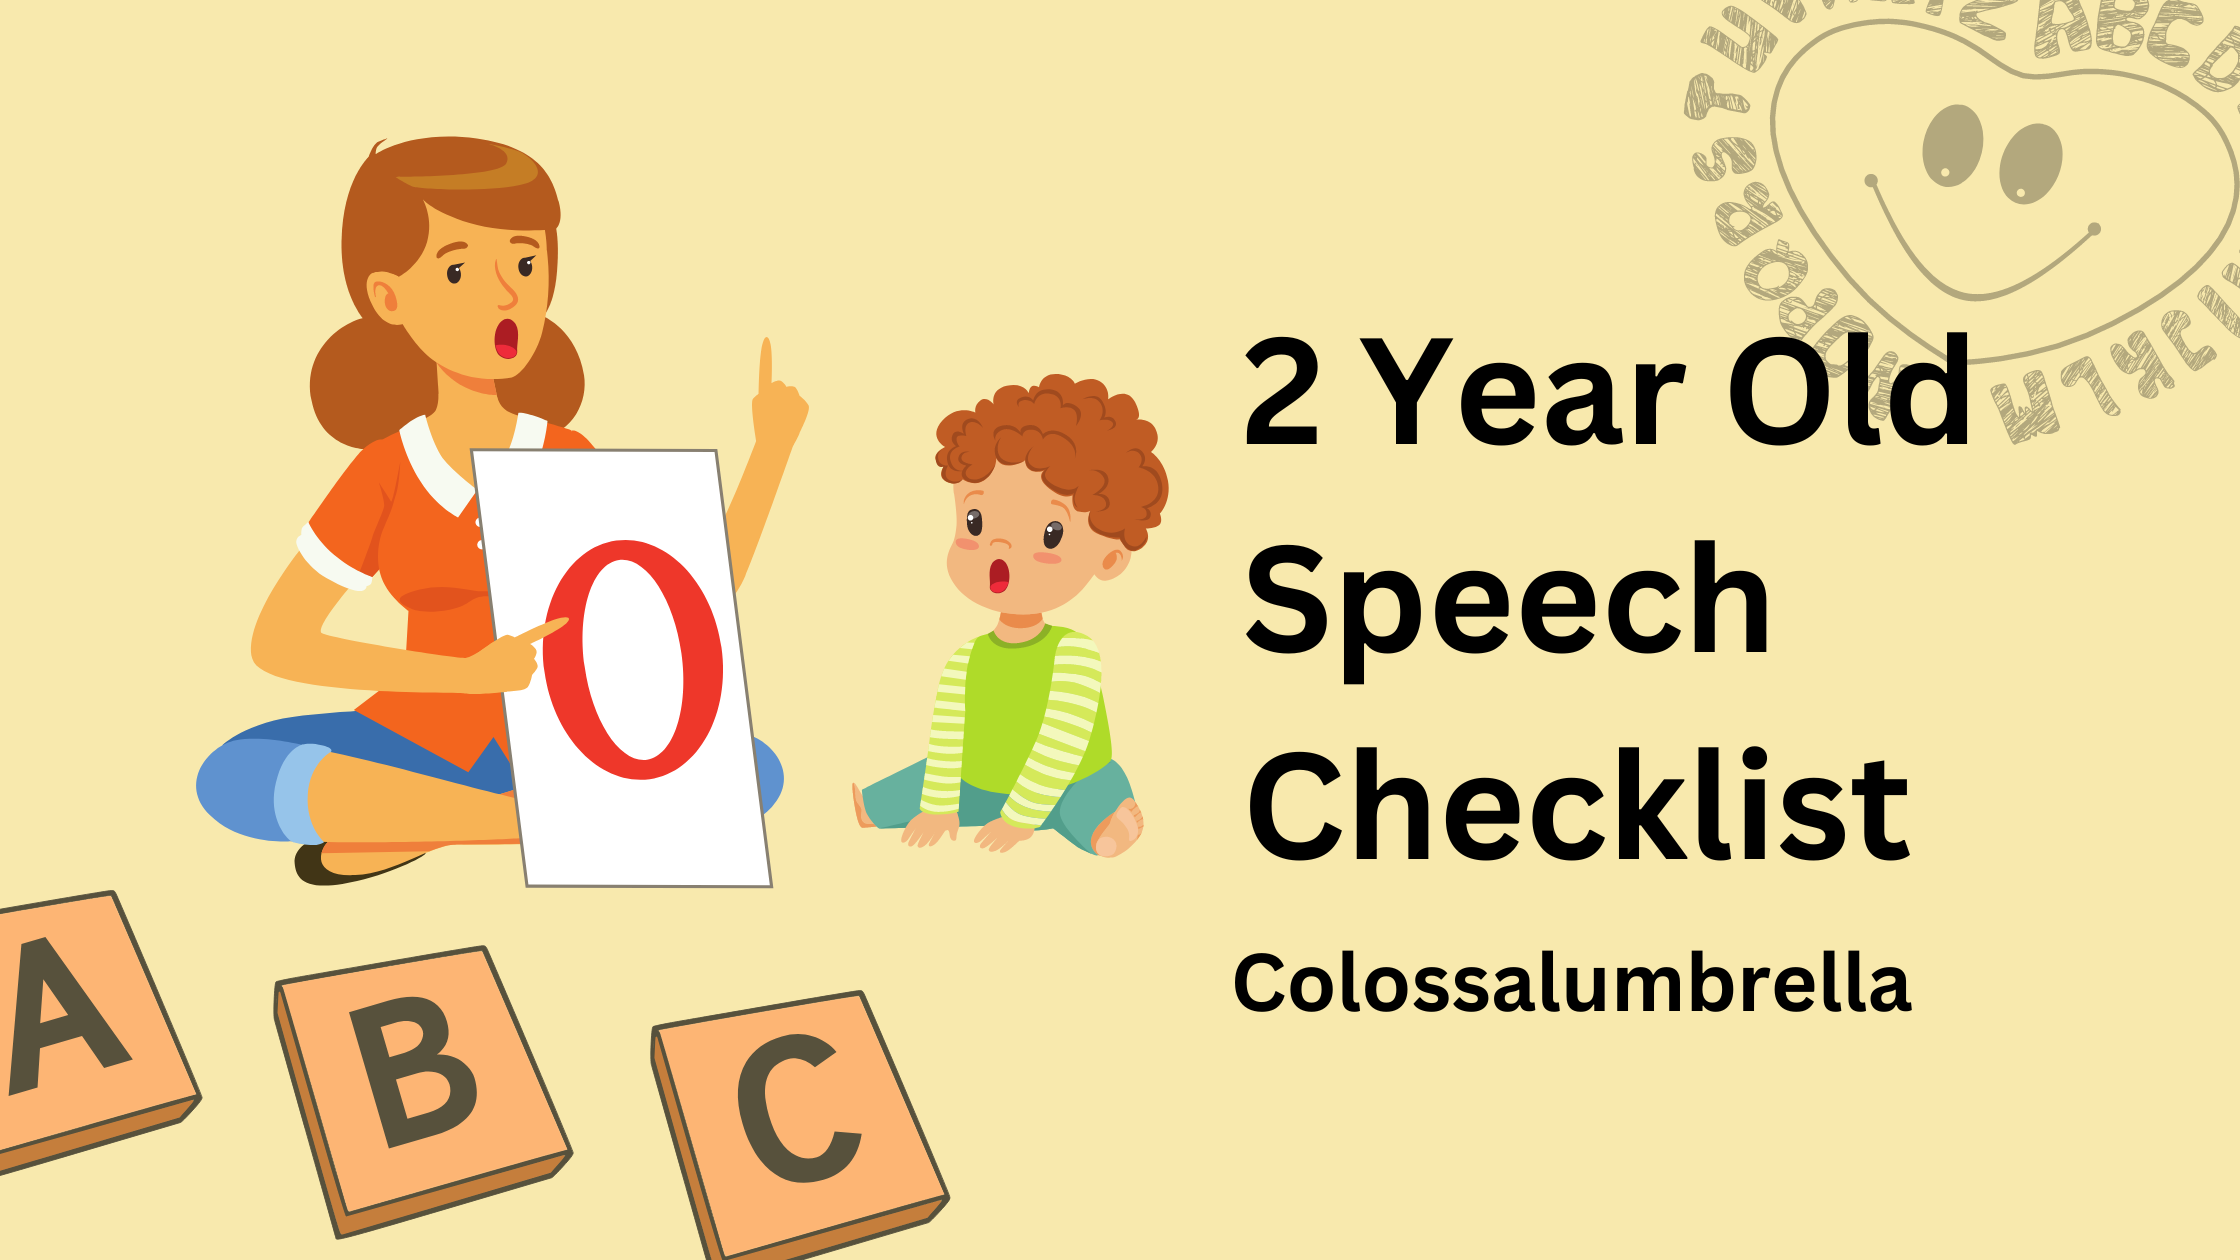 2 Year Old Speech Checklist By Colossalumbrella